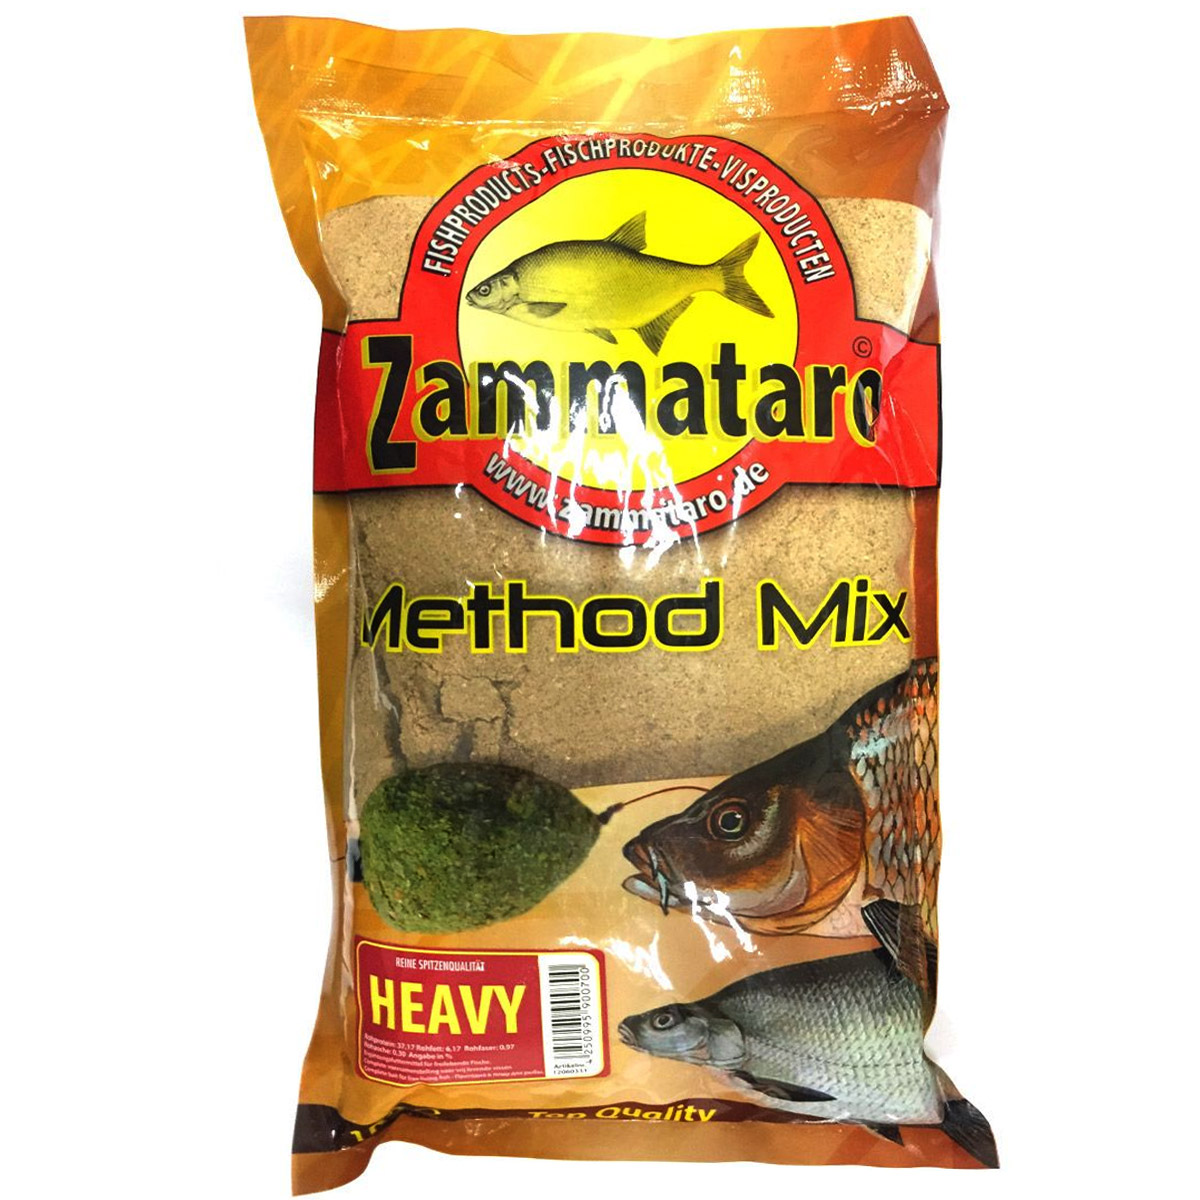 Zammataro Method Mix Heavy